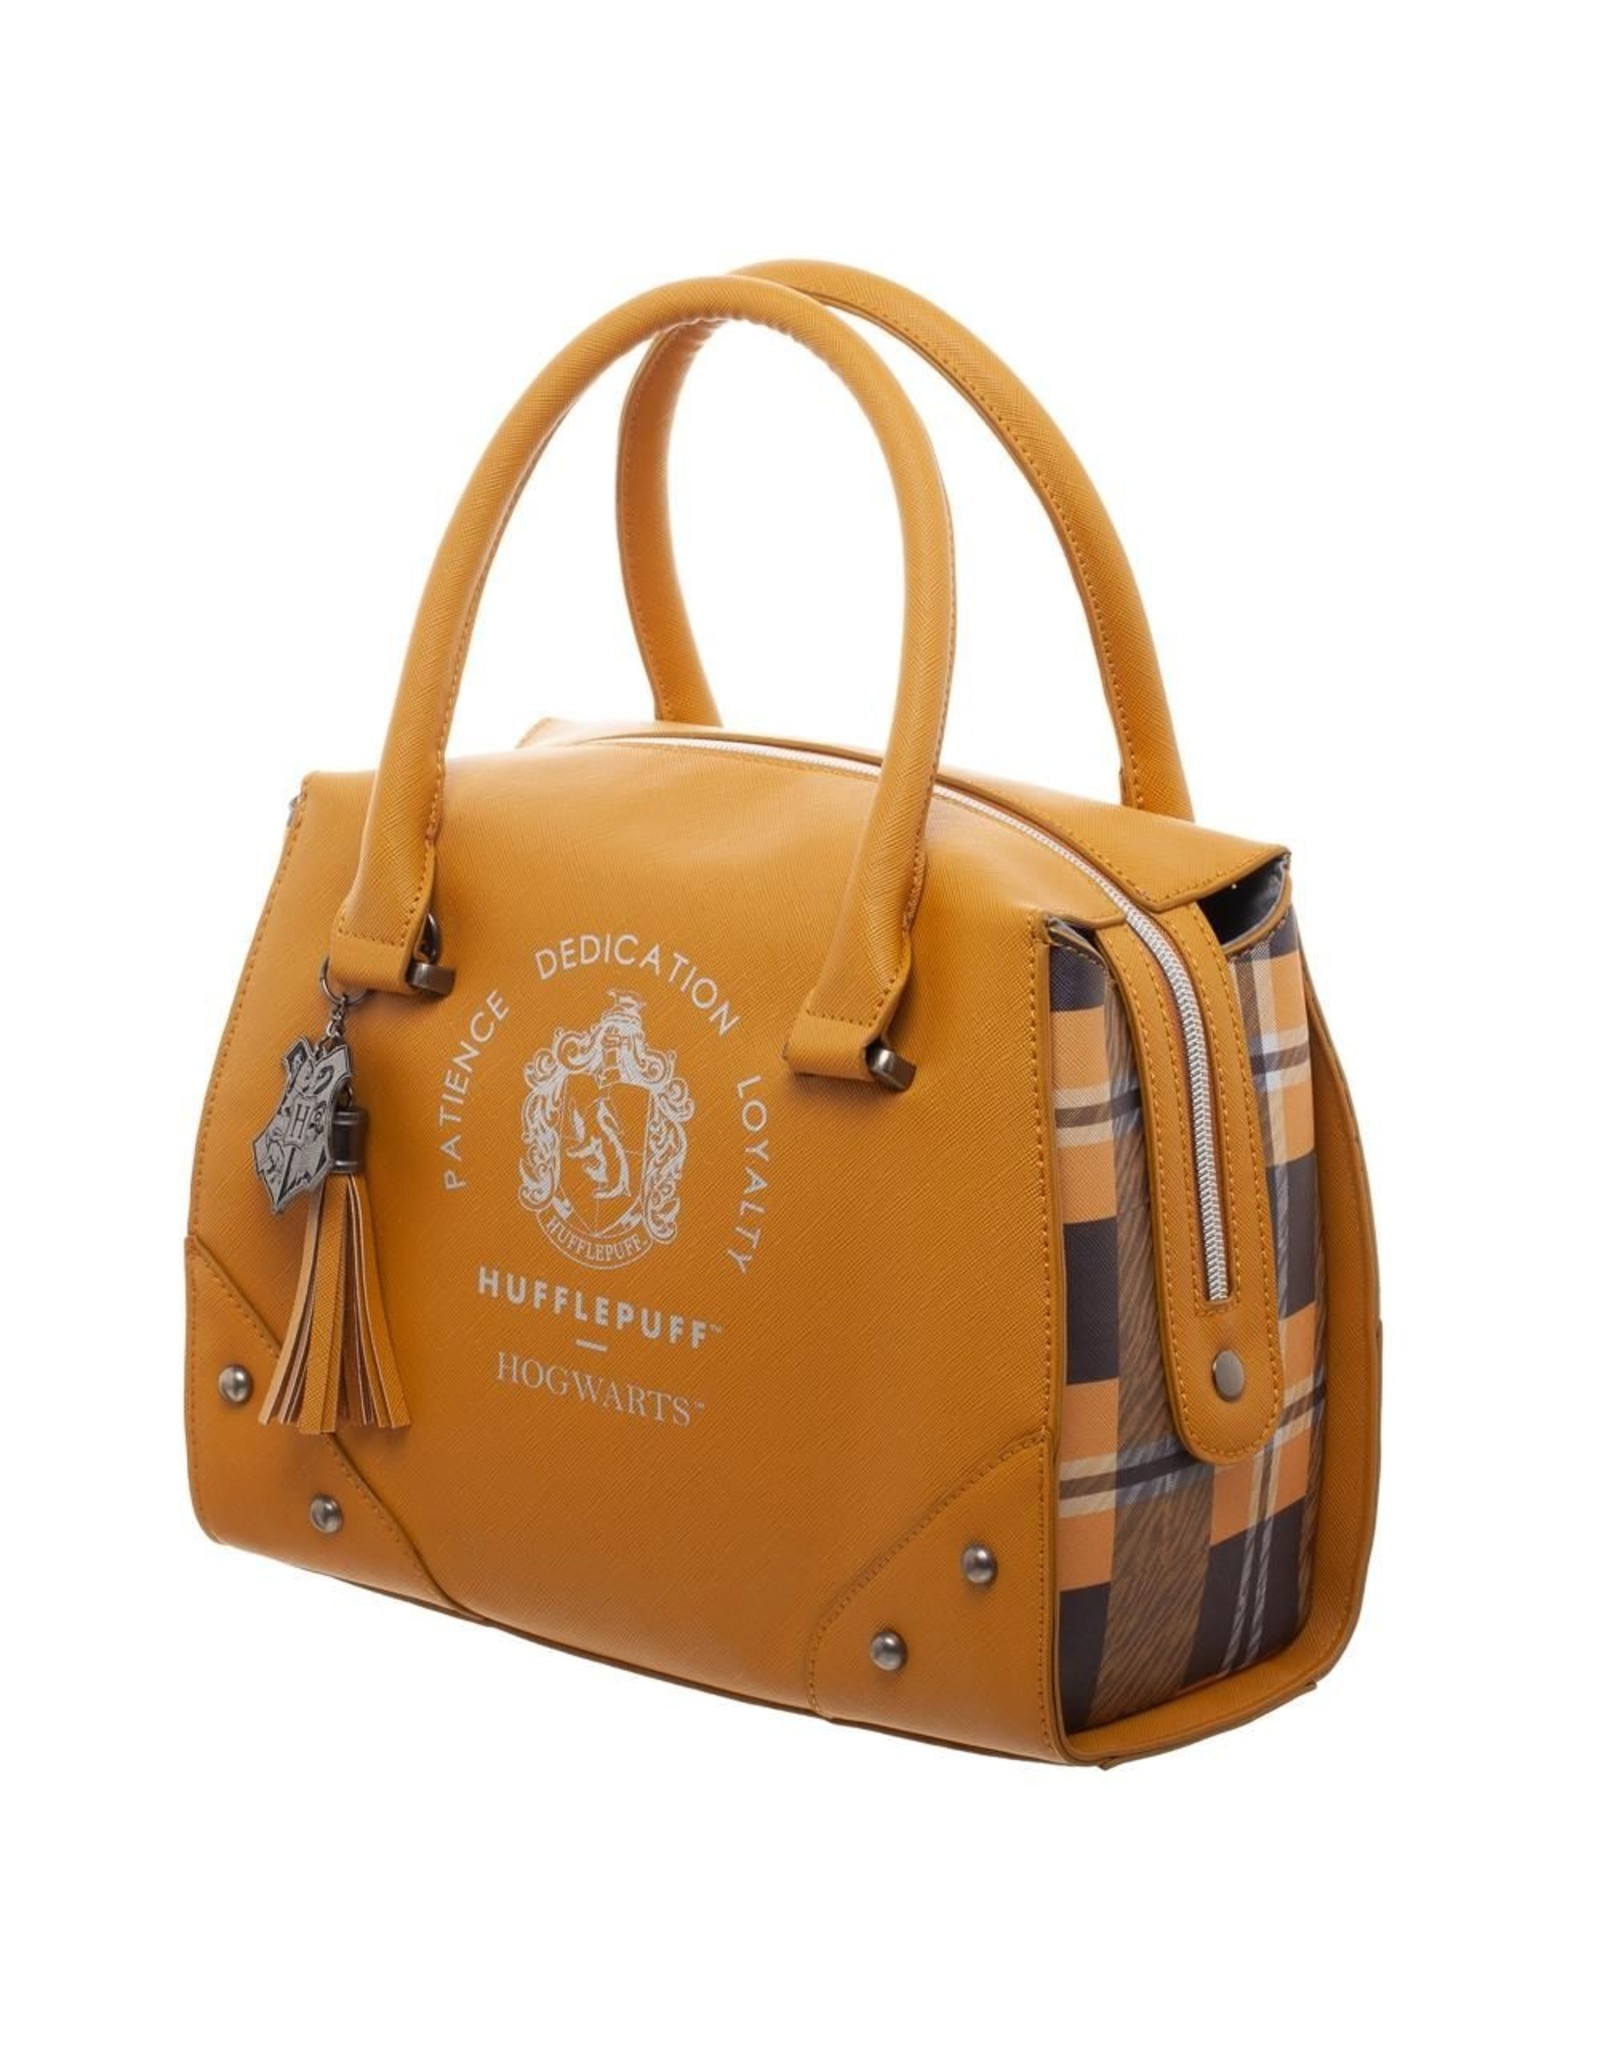 Harry Potter Merchandise - Harry Potter Hufflepuff Luxury Handbag with Plaid Sides